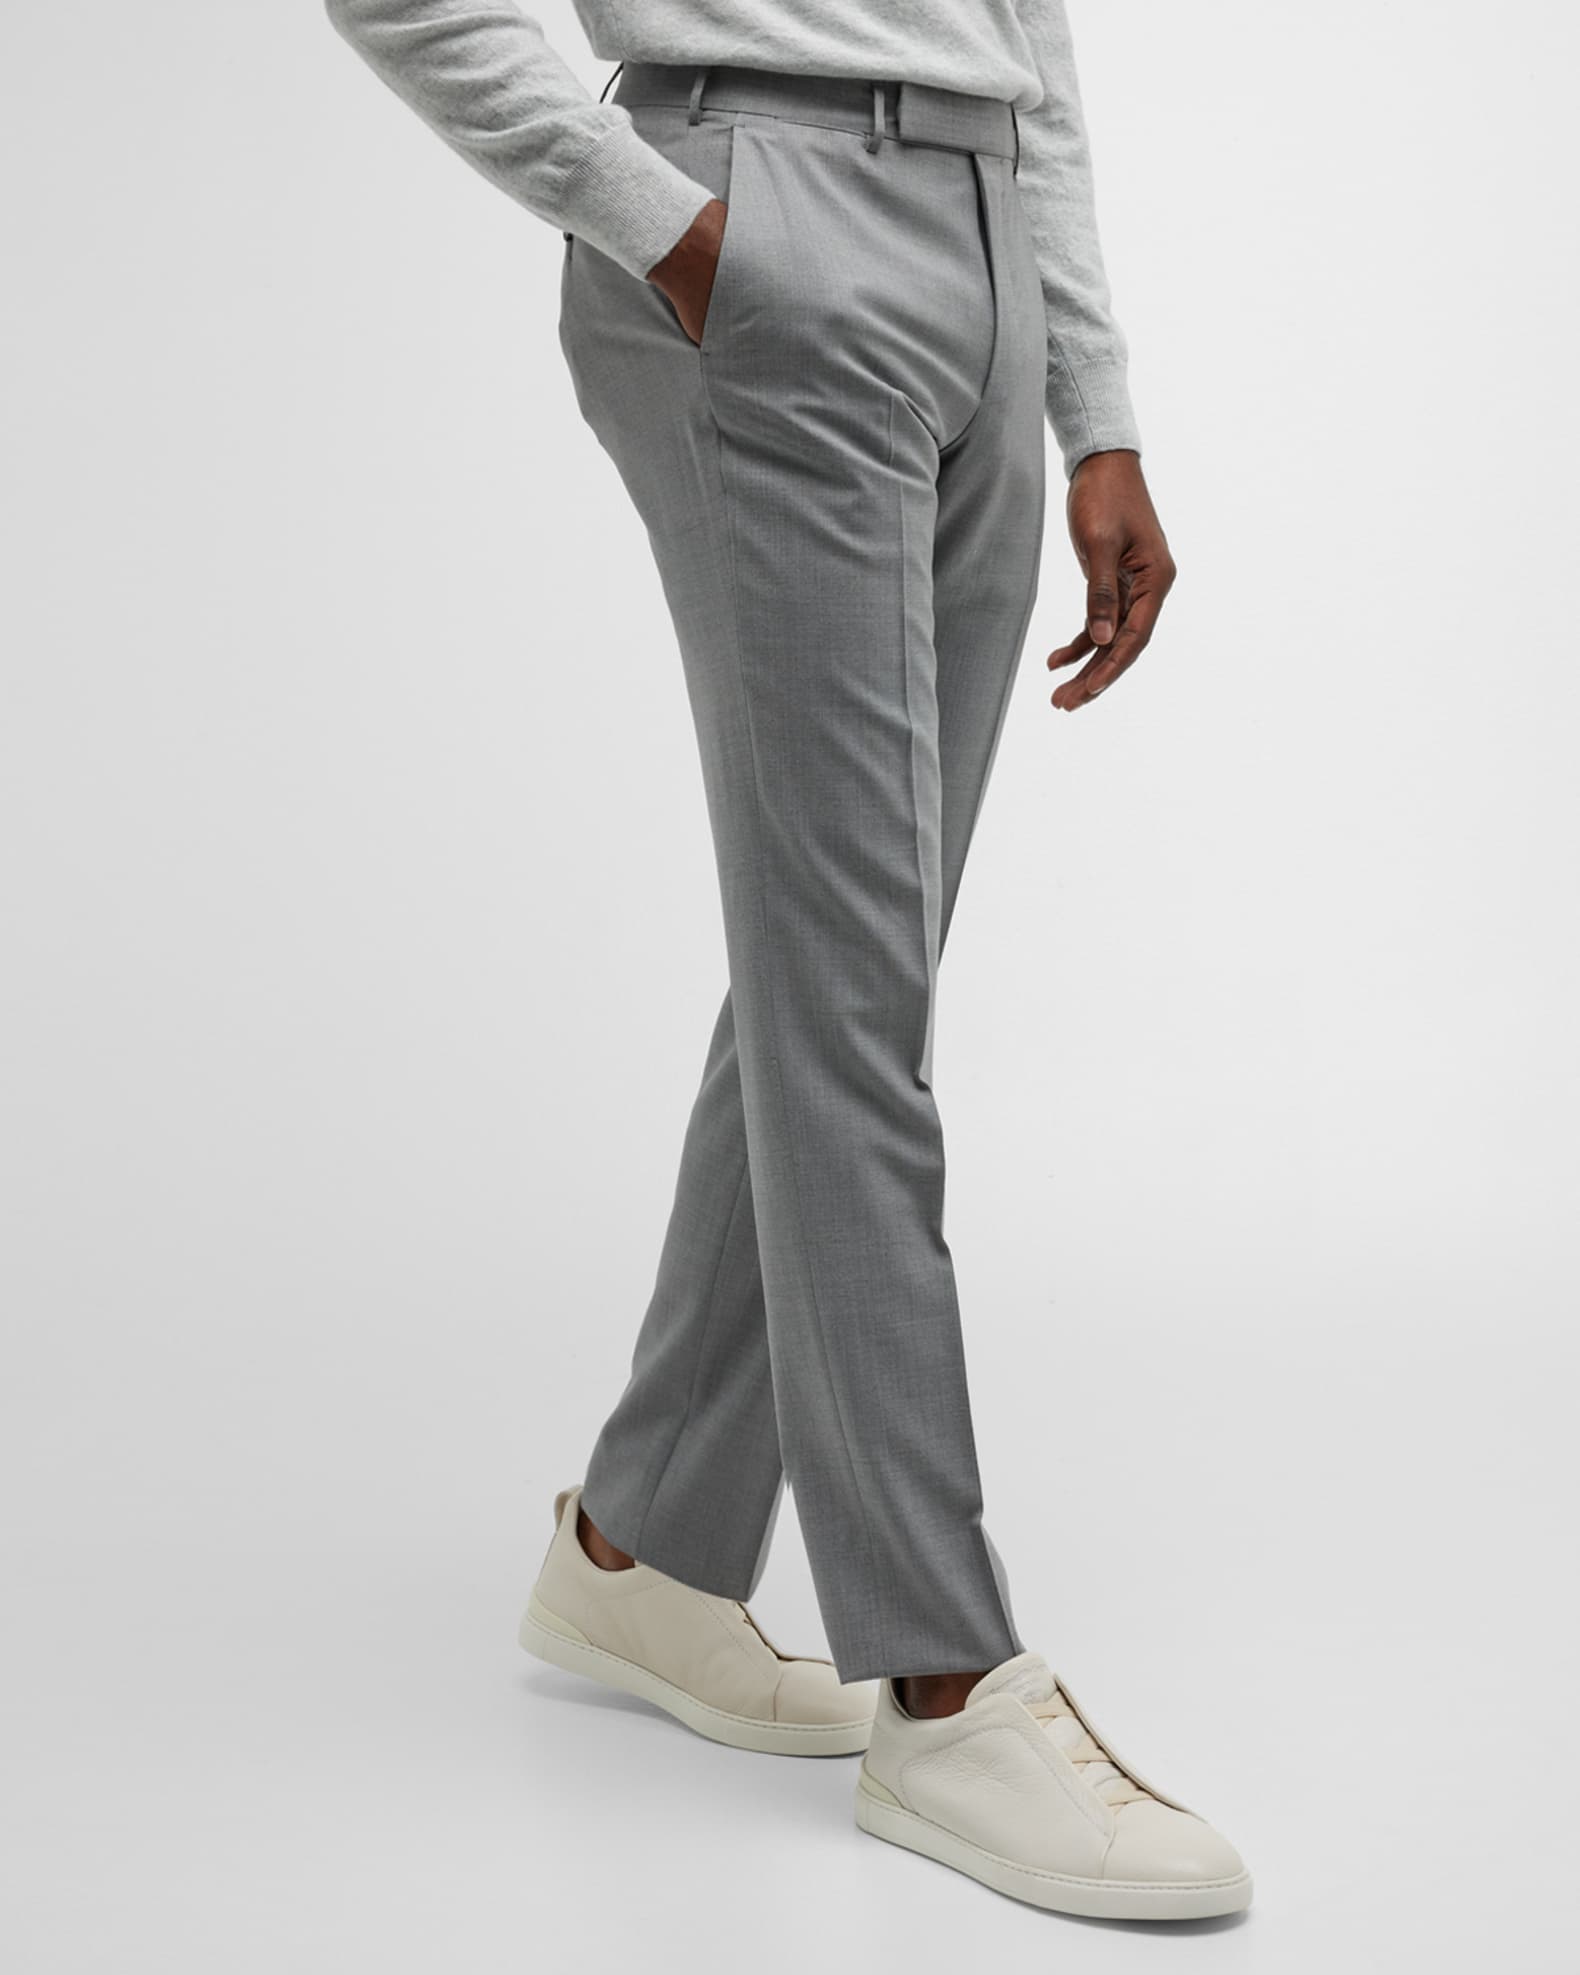 ZEGNA Men's Solid High Performance Wool Pants | Neiman Marcus